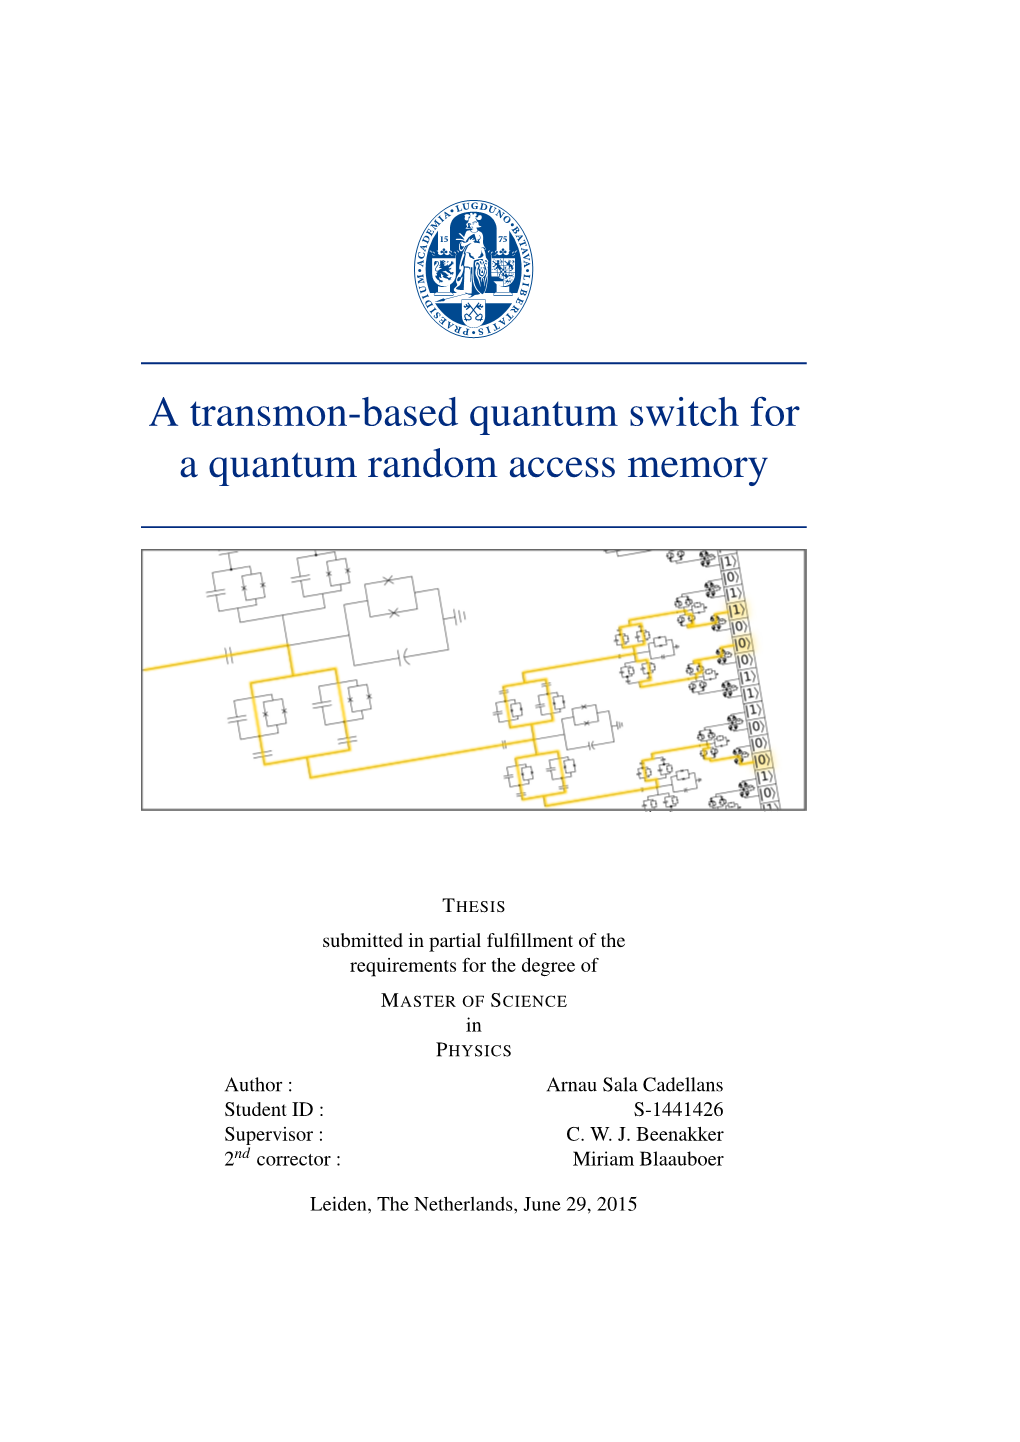 A Transmon-Based Quantum Switch for a Quantum Random Access Memory